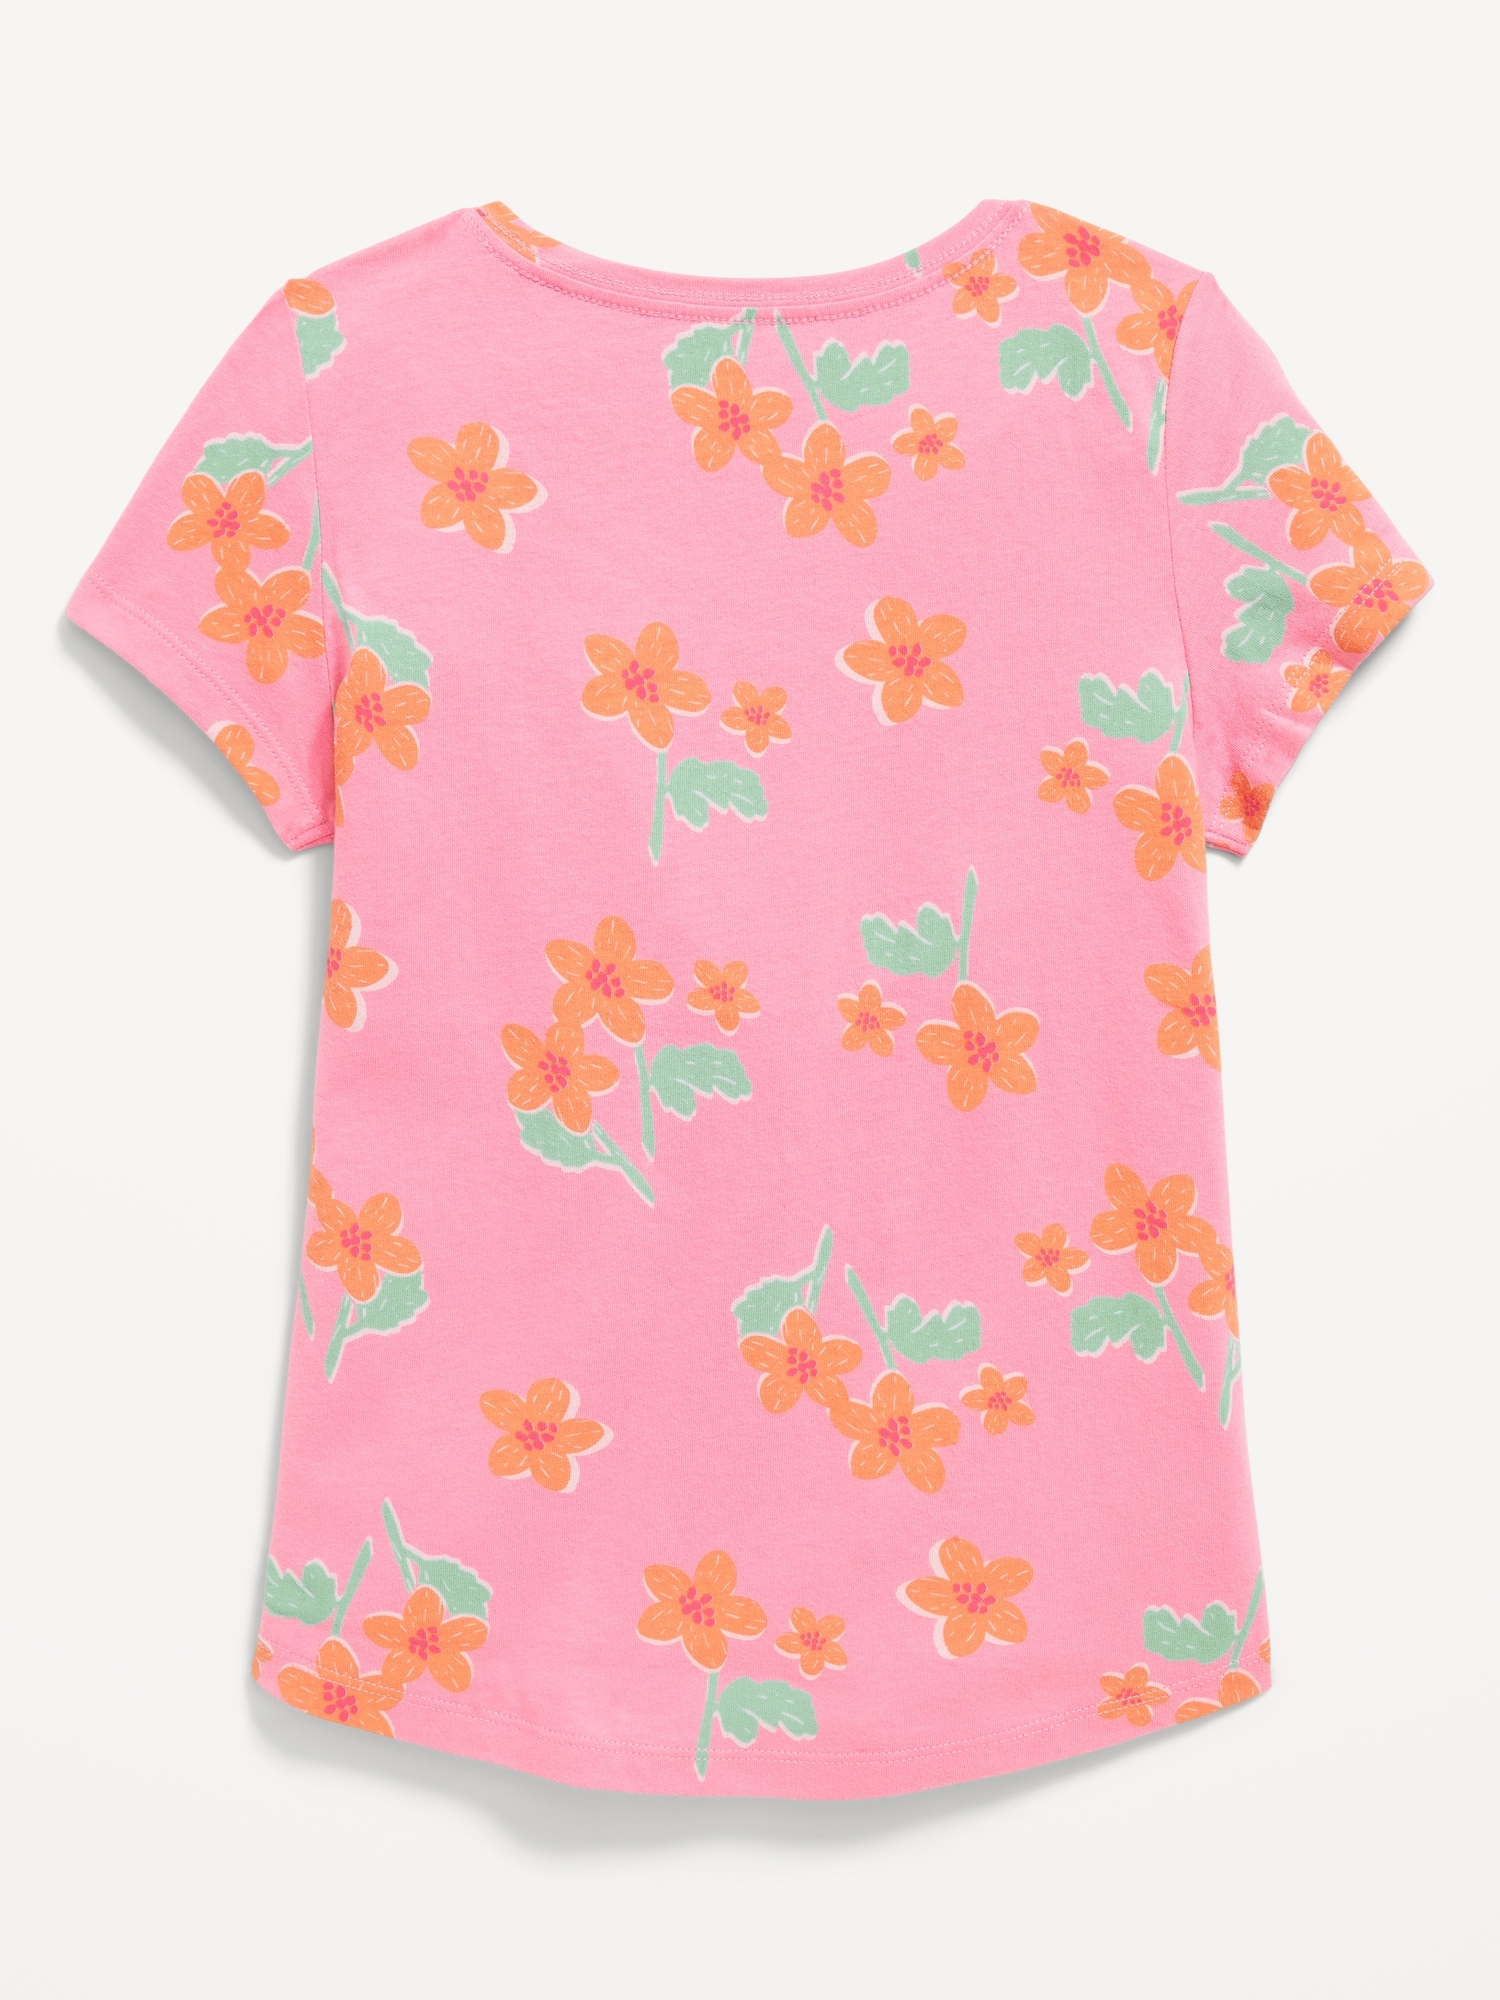 Softest Short-Sleeve T-Shirt for Girls | Old Navy